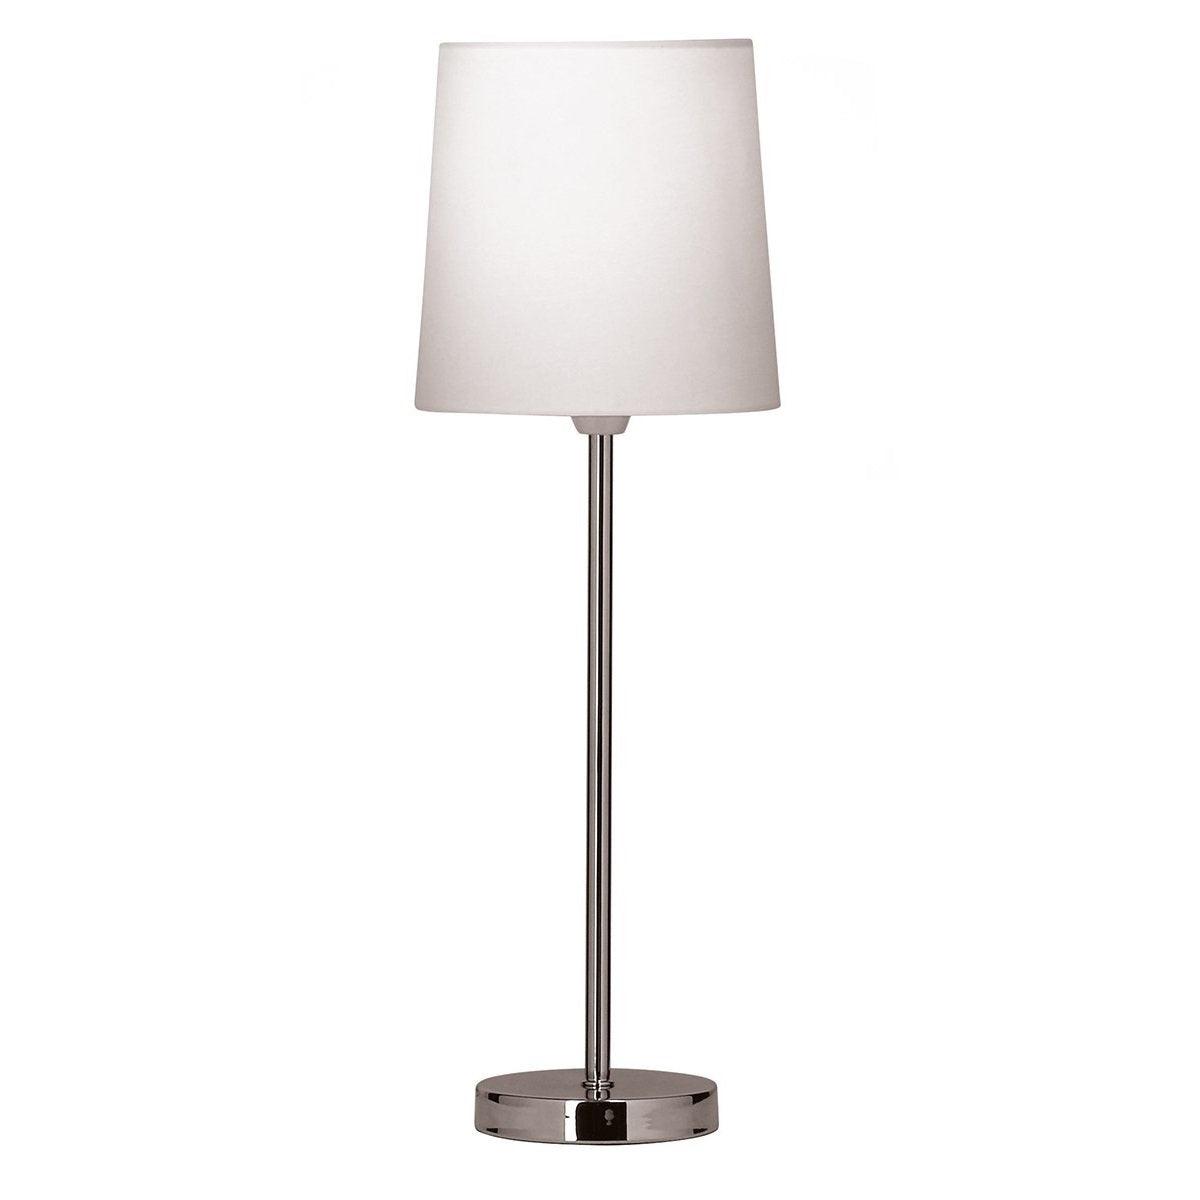 Tall Stick Table Lamp - White - Peter Murphy Lighting & Electrical Ltd